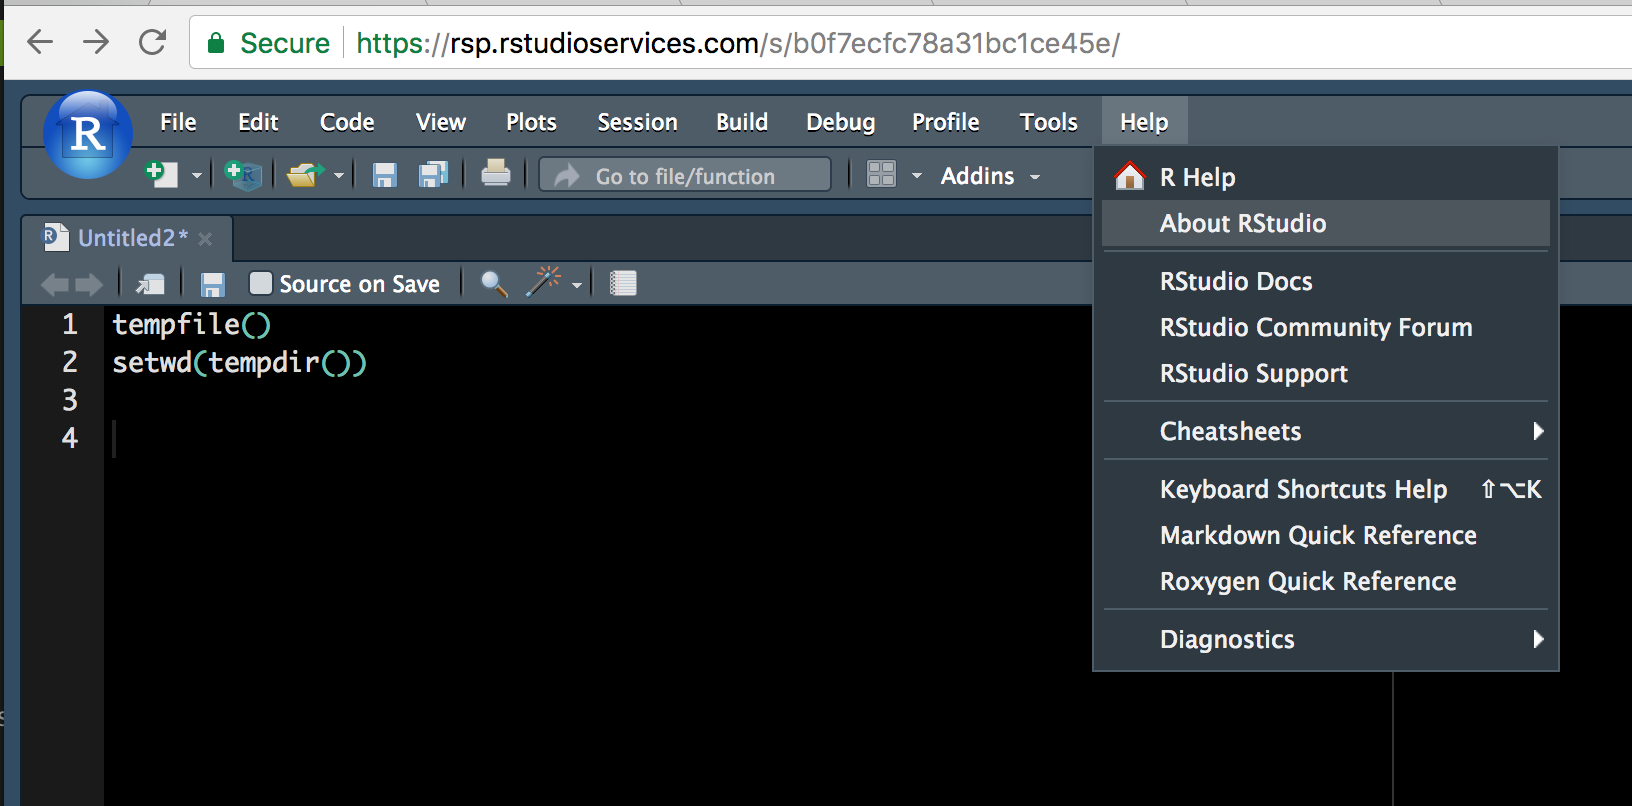 Finding out rstudio my ubuntu - RStudio IDE - Posit Community